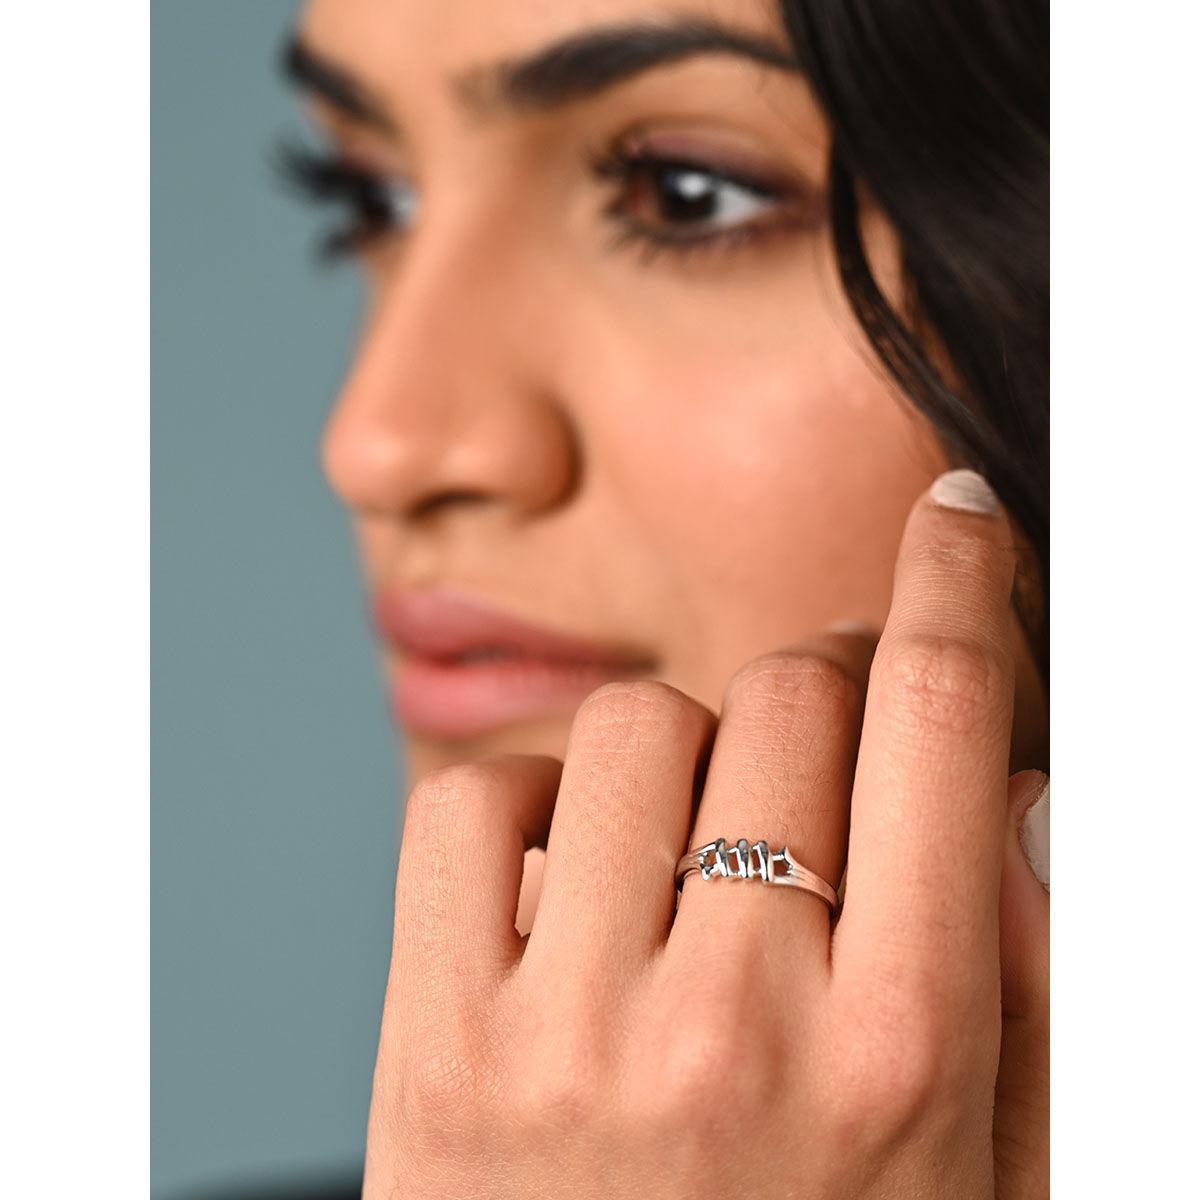 Thumb Ring Ideas for Women - Dhanalakshmi Jewellers